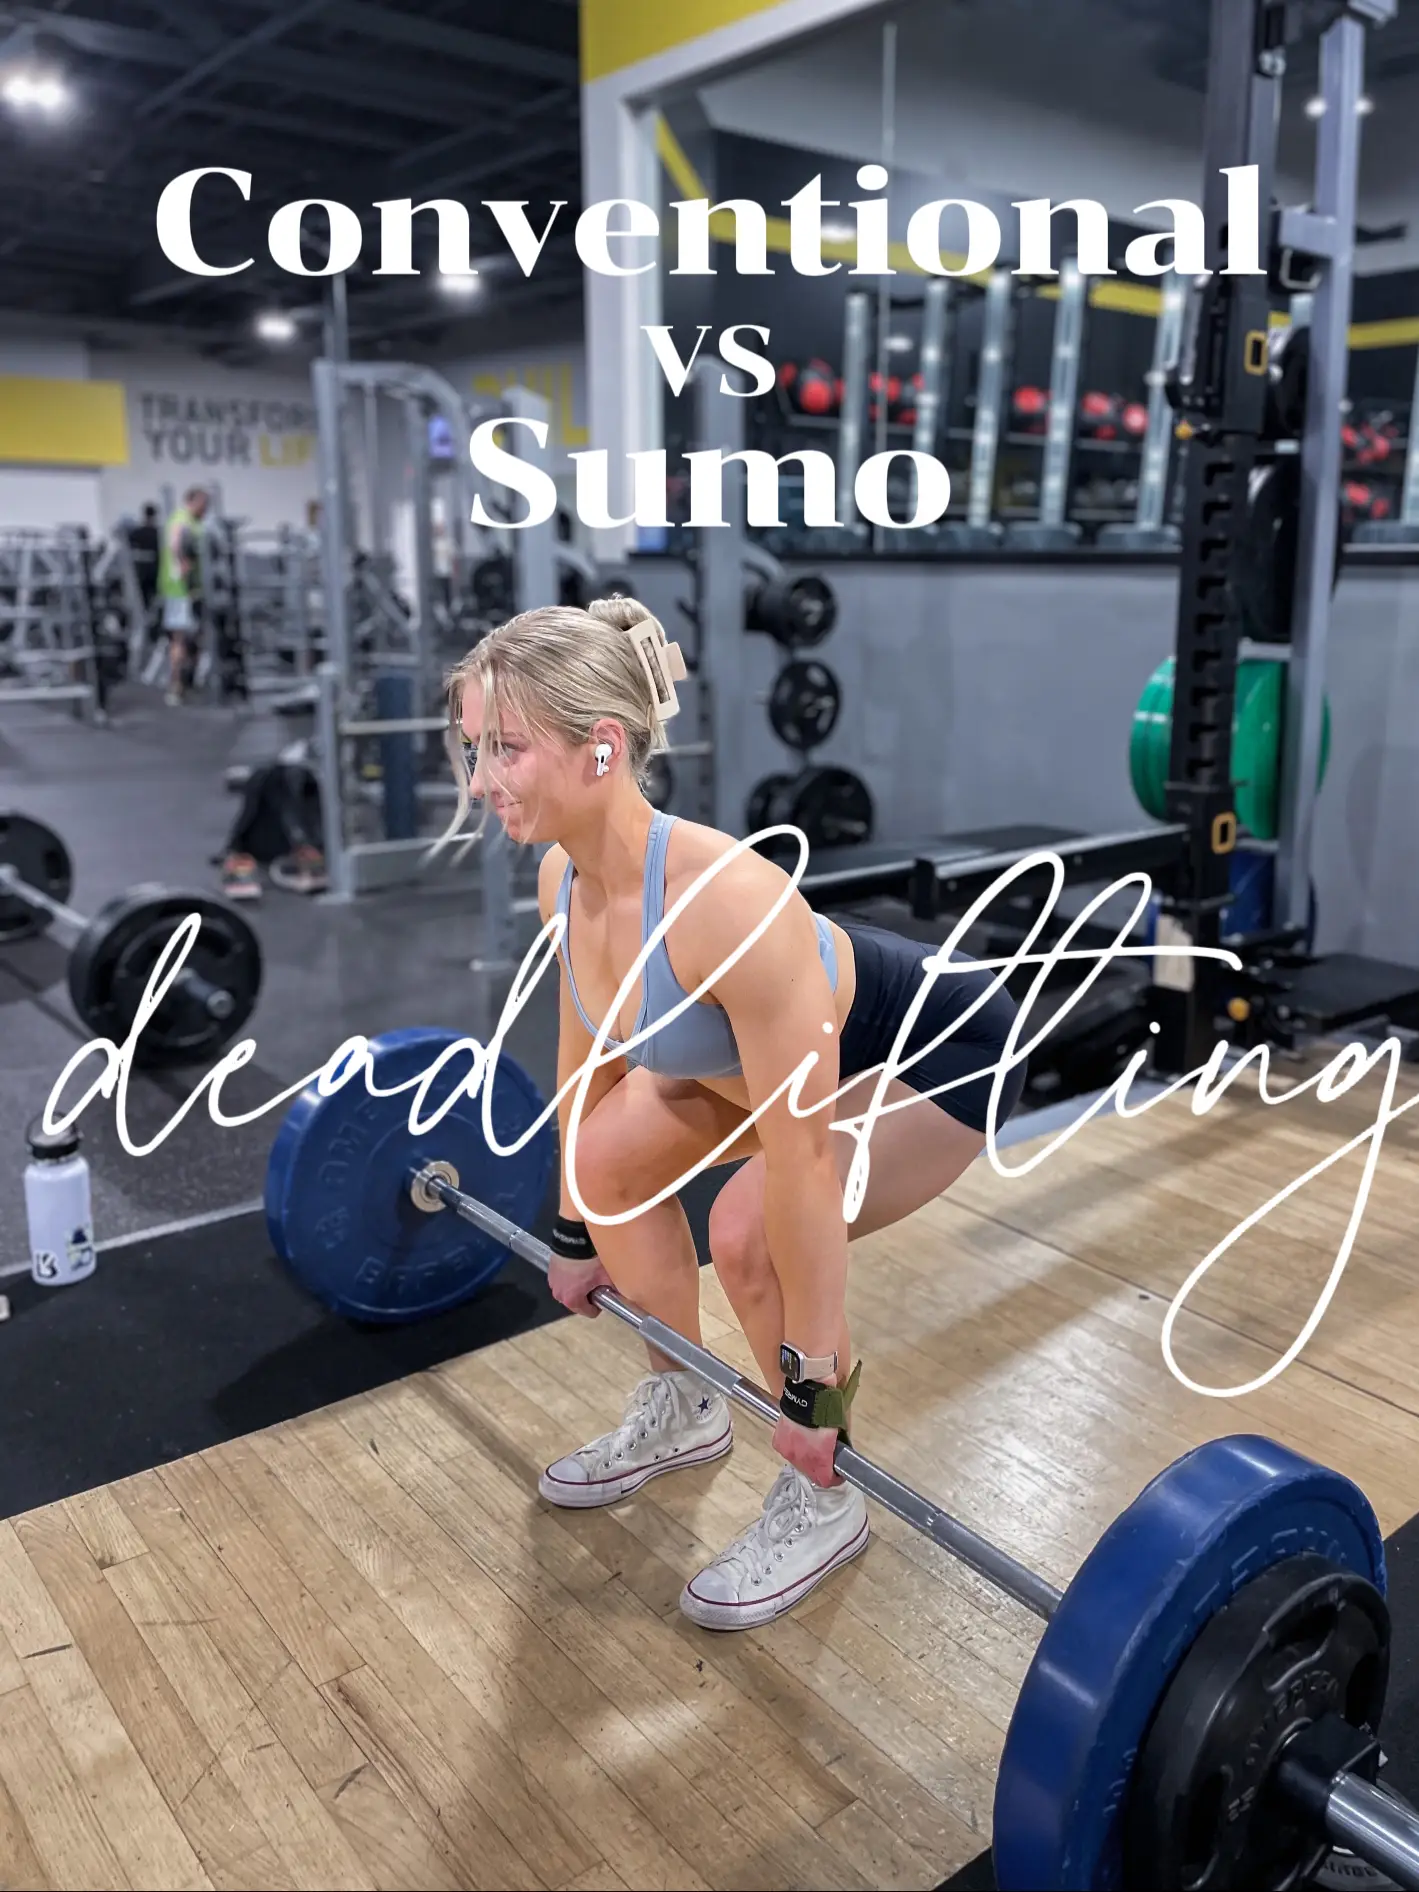 Sumo vs. Conventional deadlift